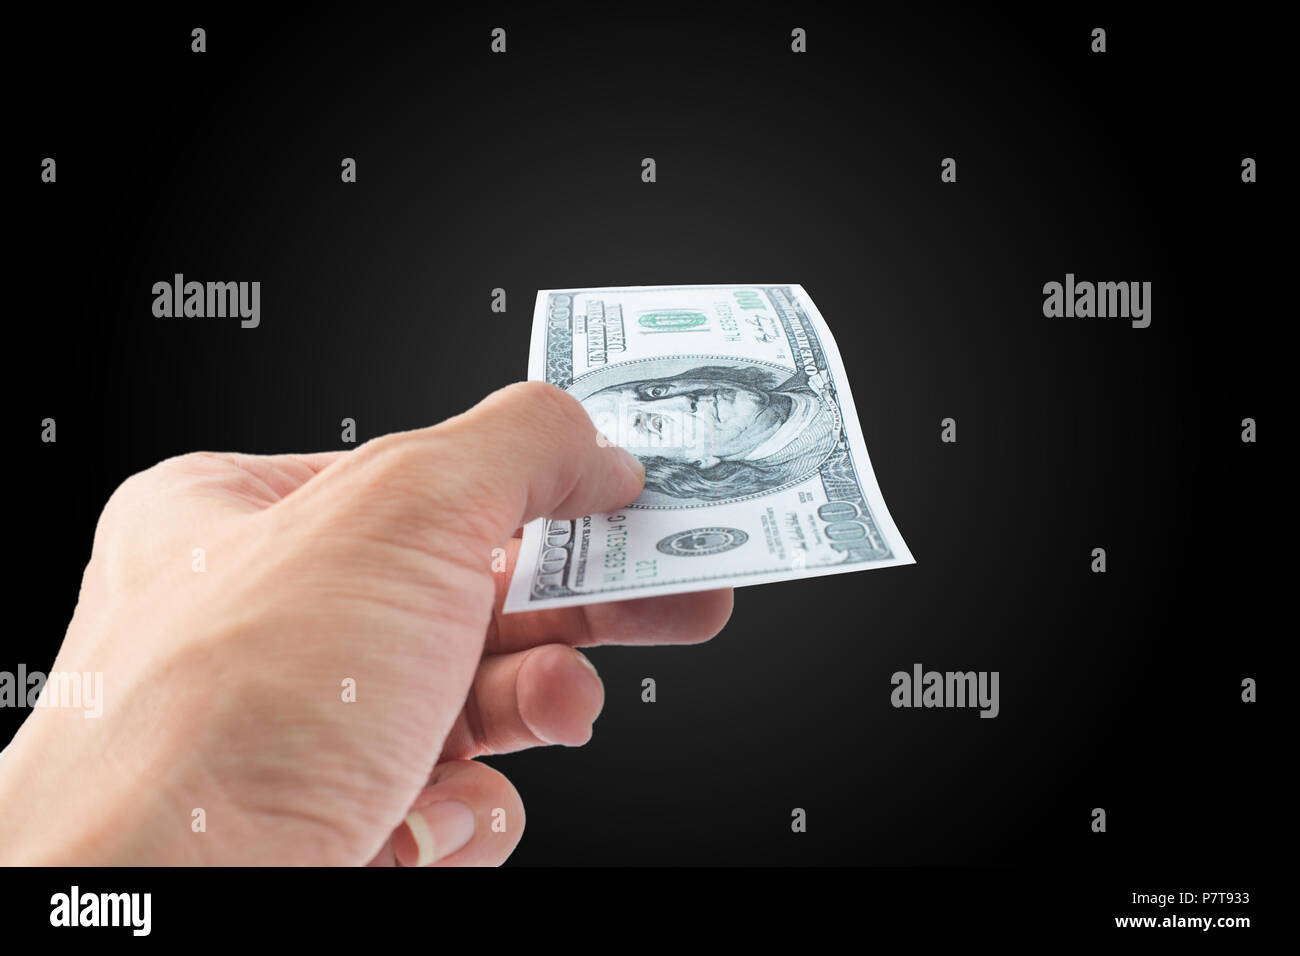 Pay money Dollar bank note on black background Stock Photo